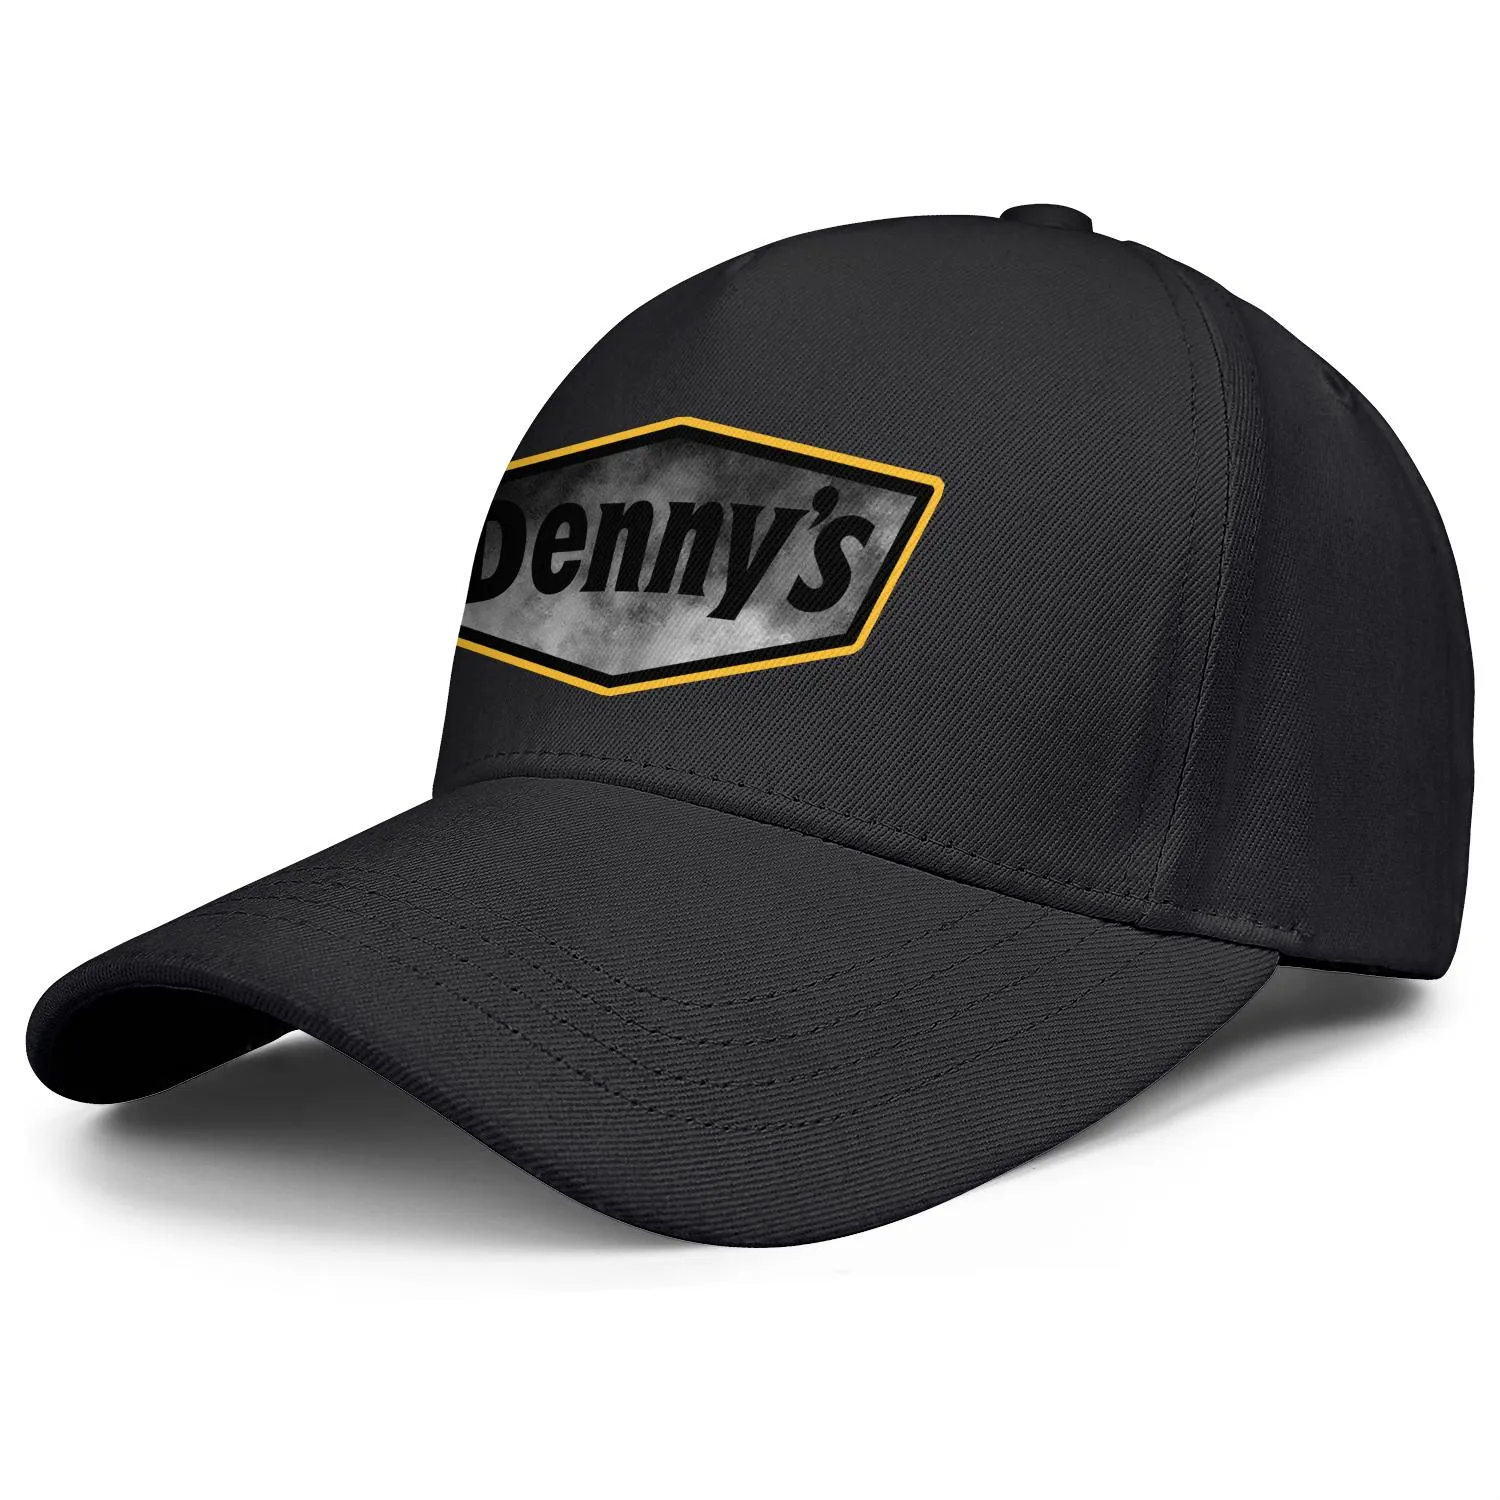 Dennys Pancake ospita logo maschile e cappellino camionista regolabile da donna golf fresco personalizzato da baseball halchats dora